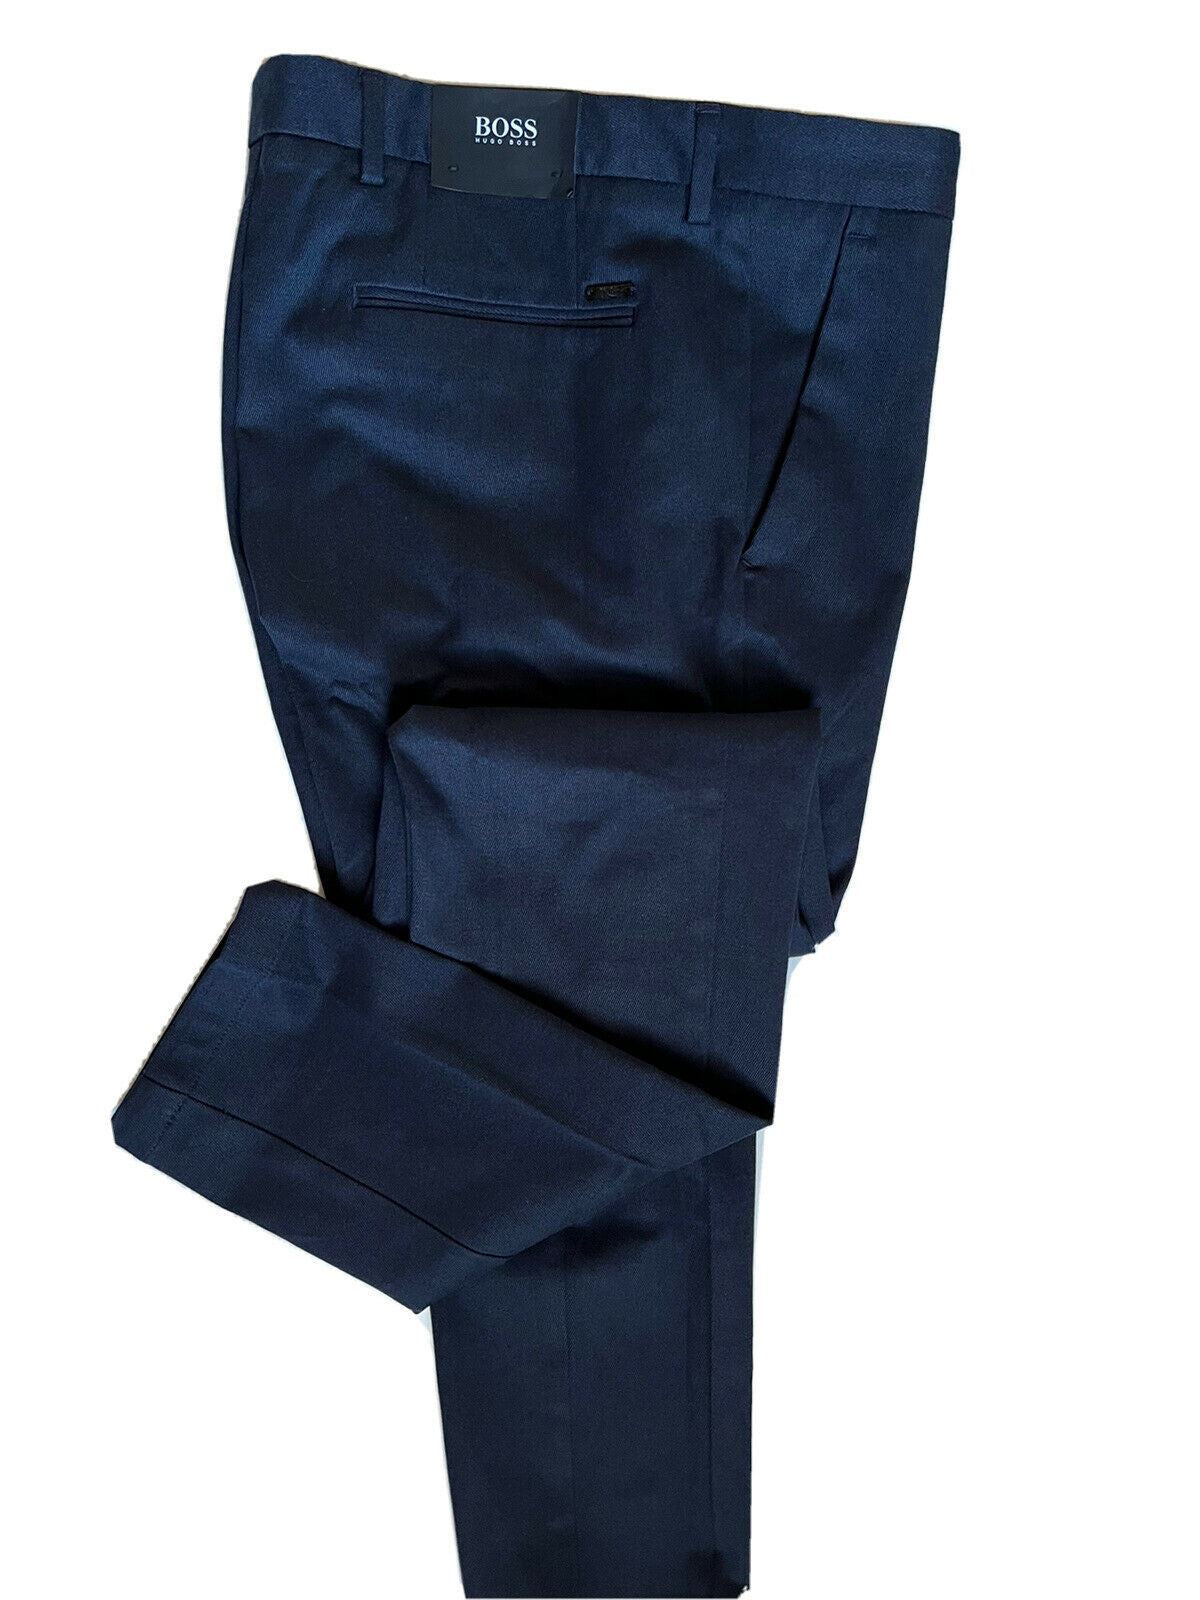 NWT $228 Boss Hugo Boss Kaito1 Stretch Men's Blue Dress Pants 34 US (50 Euro)